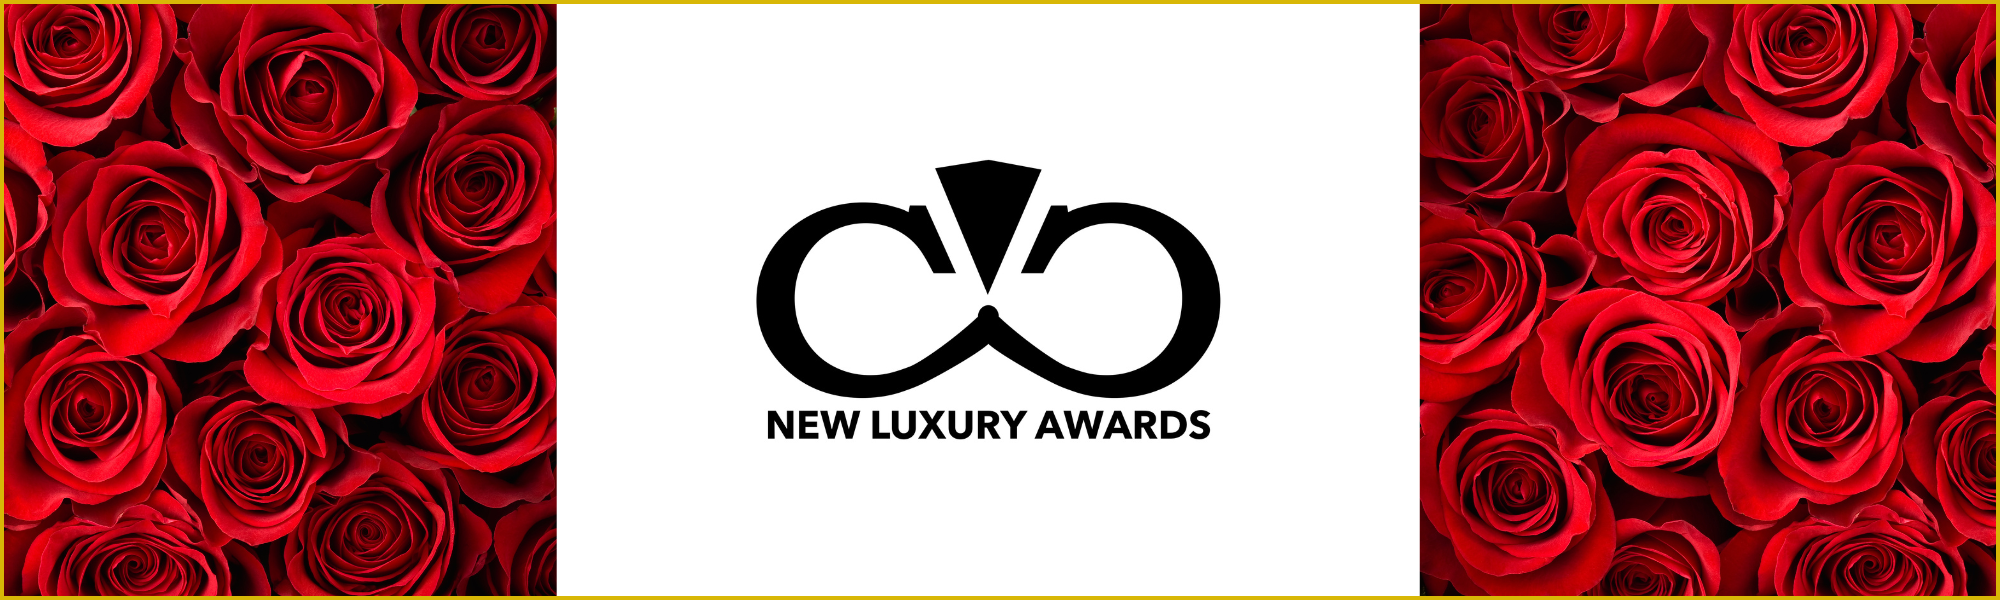 New Luxury Awards 